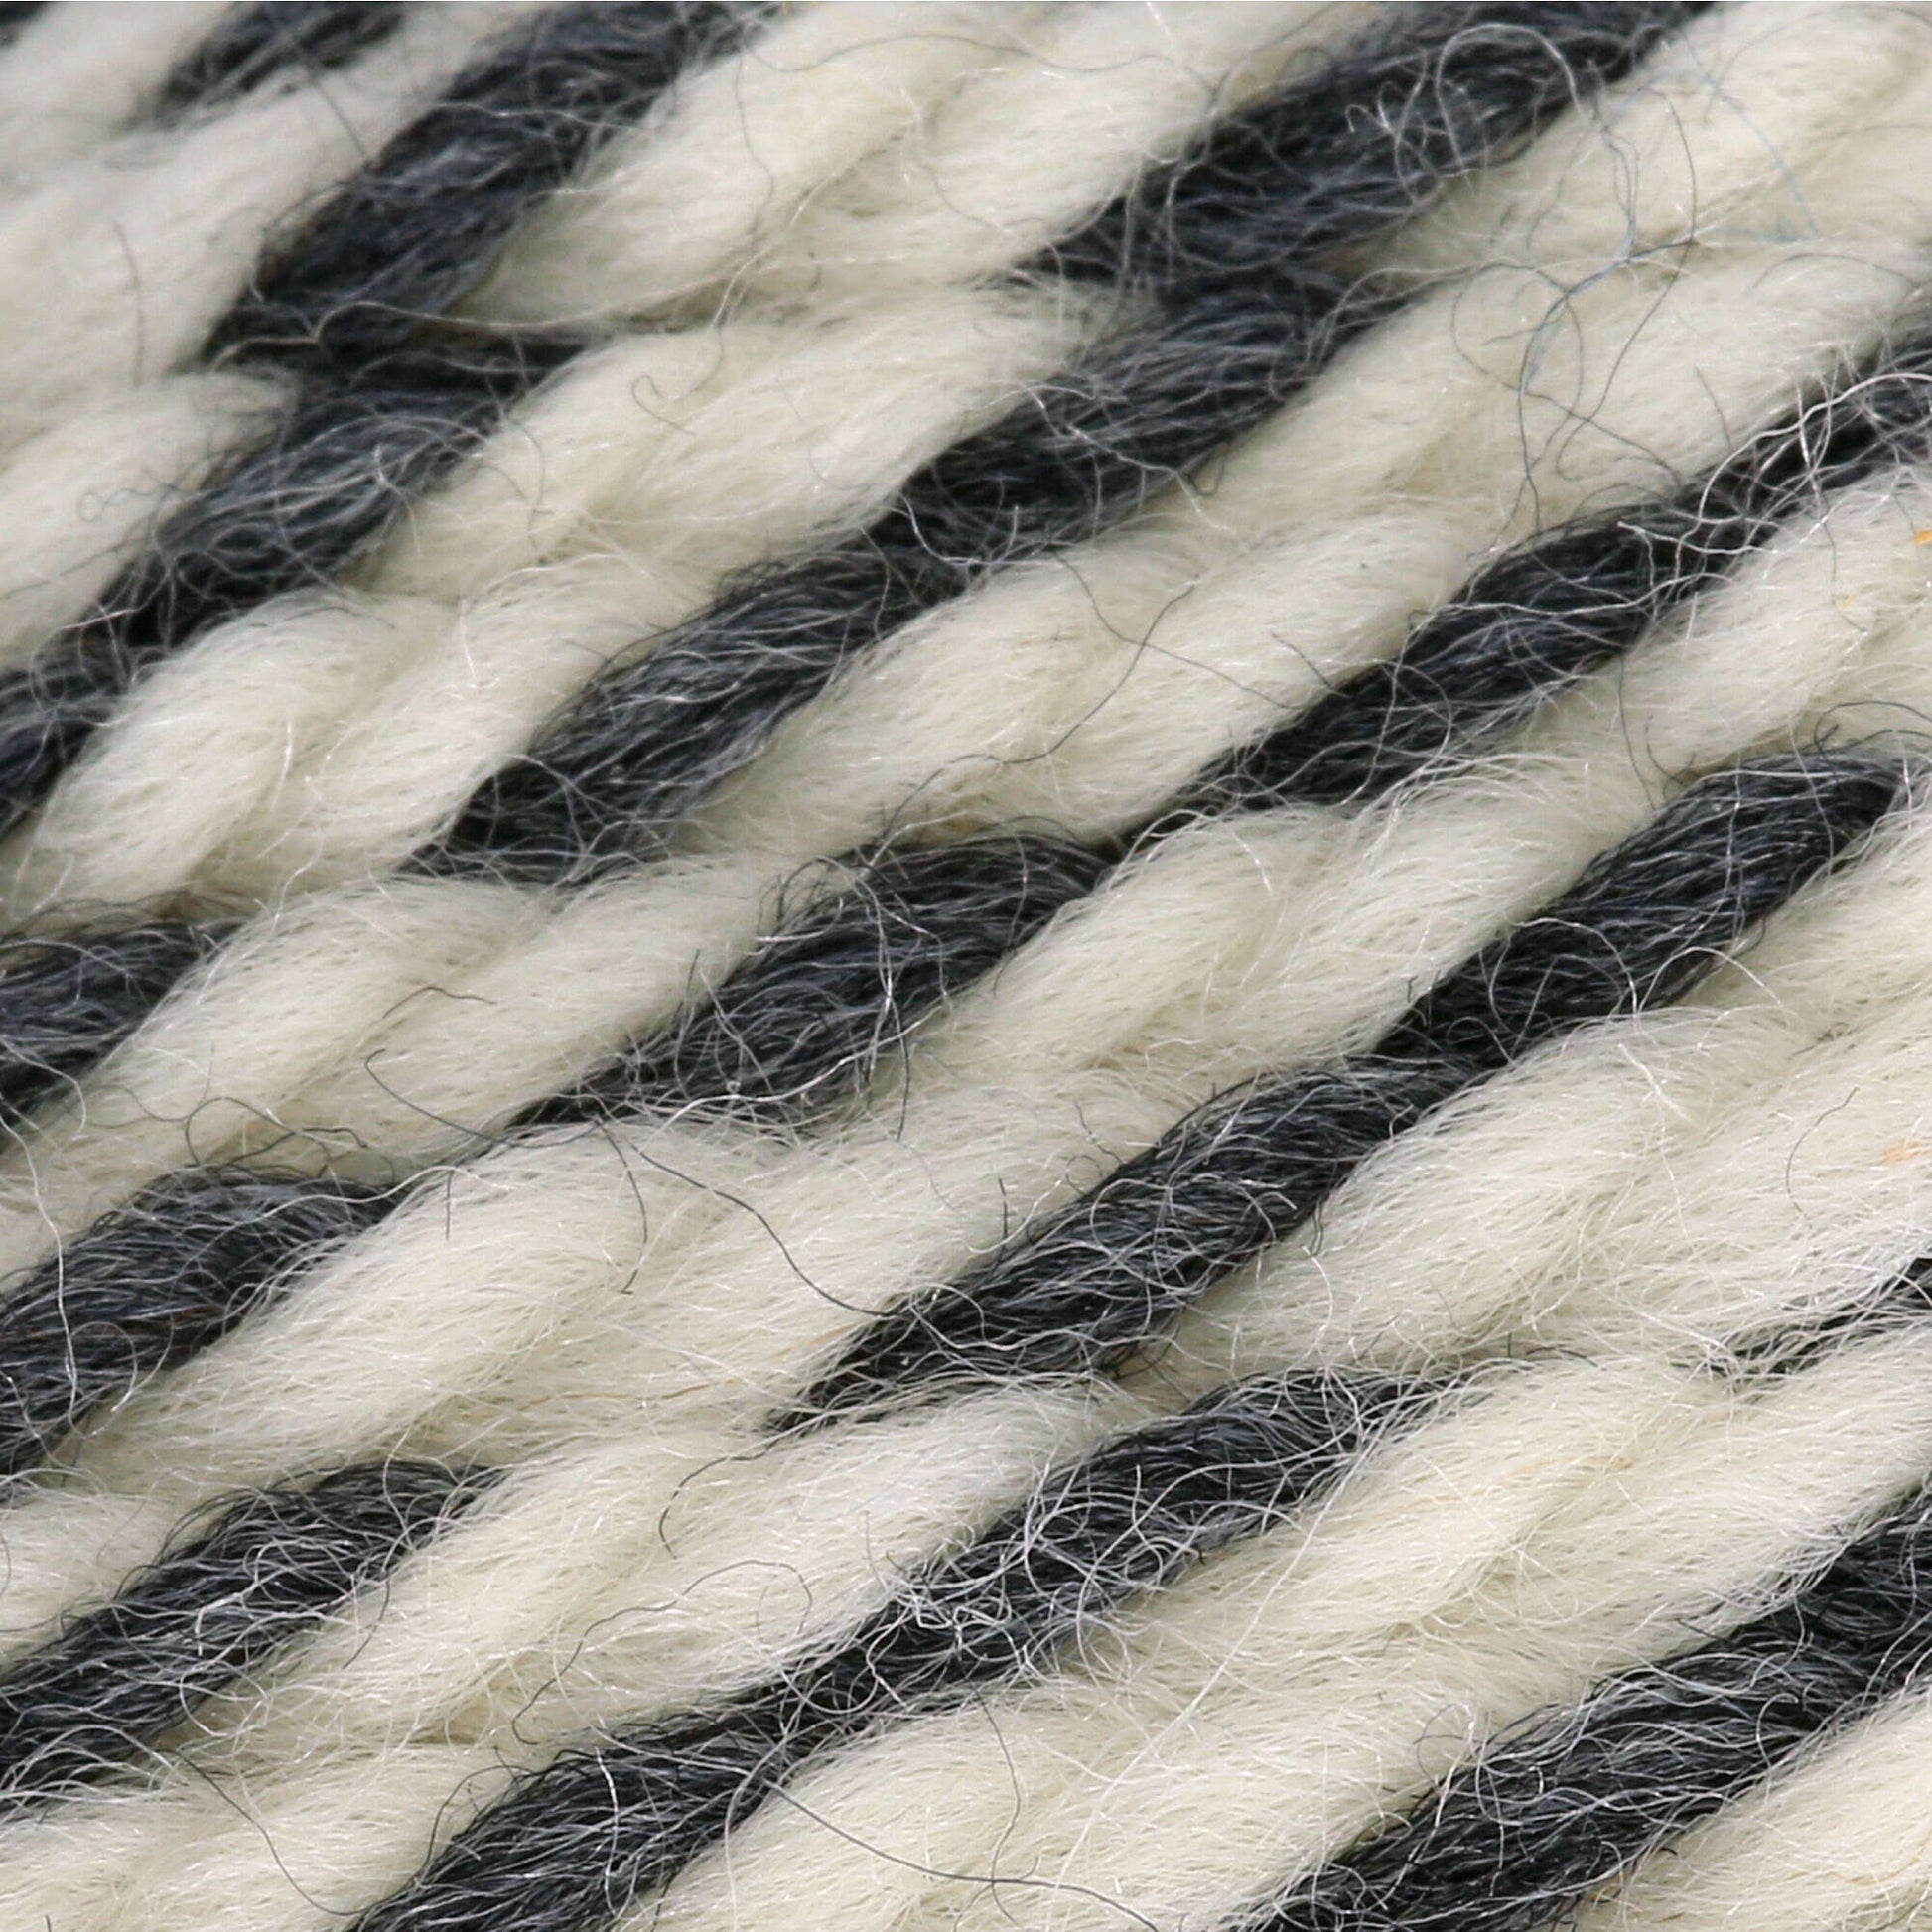 Patons Classic Wool Bulky Yarn - Discontinued Shades Dark Gray Ragg